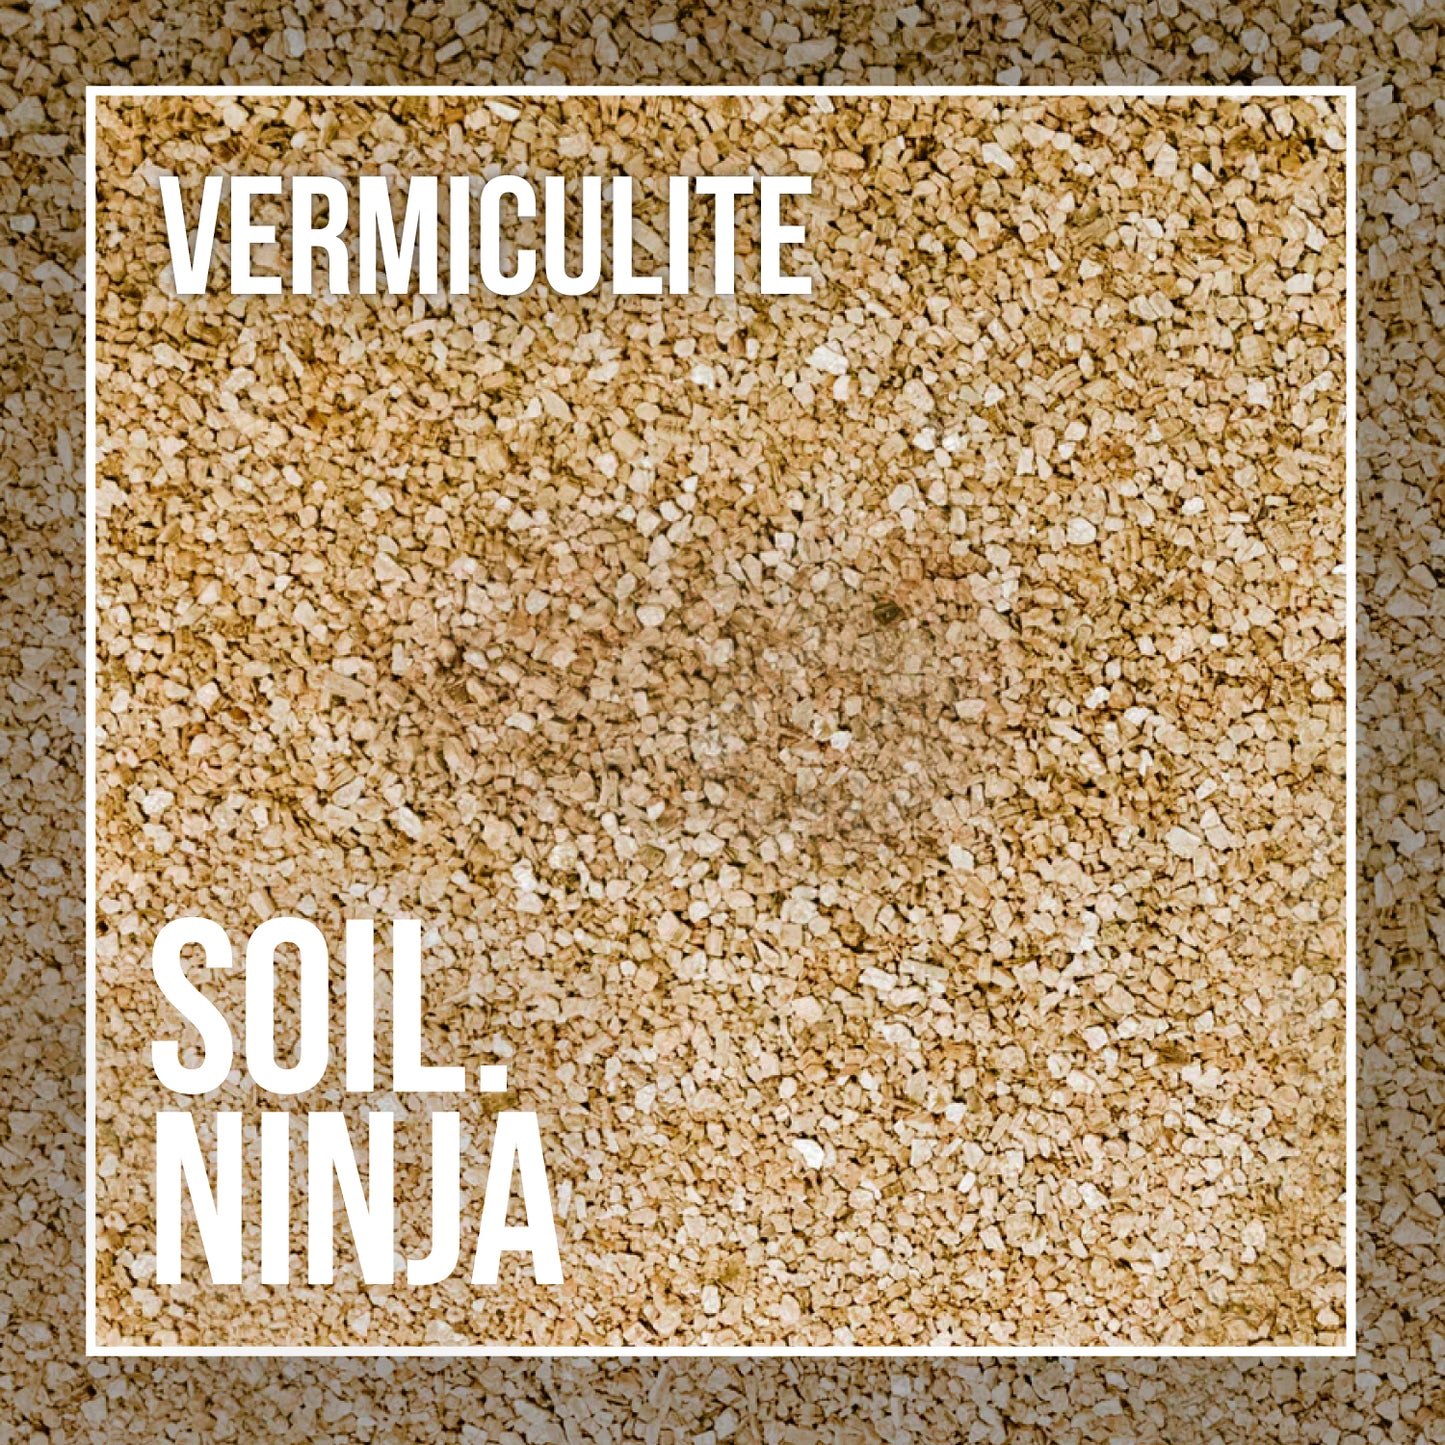 Vermiculite potting mix